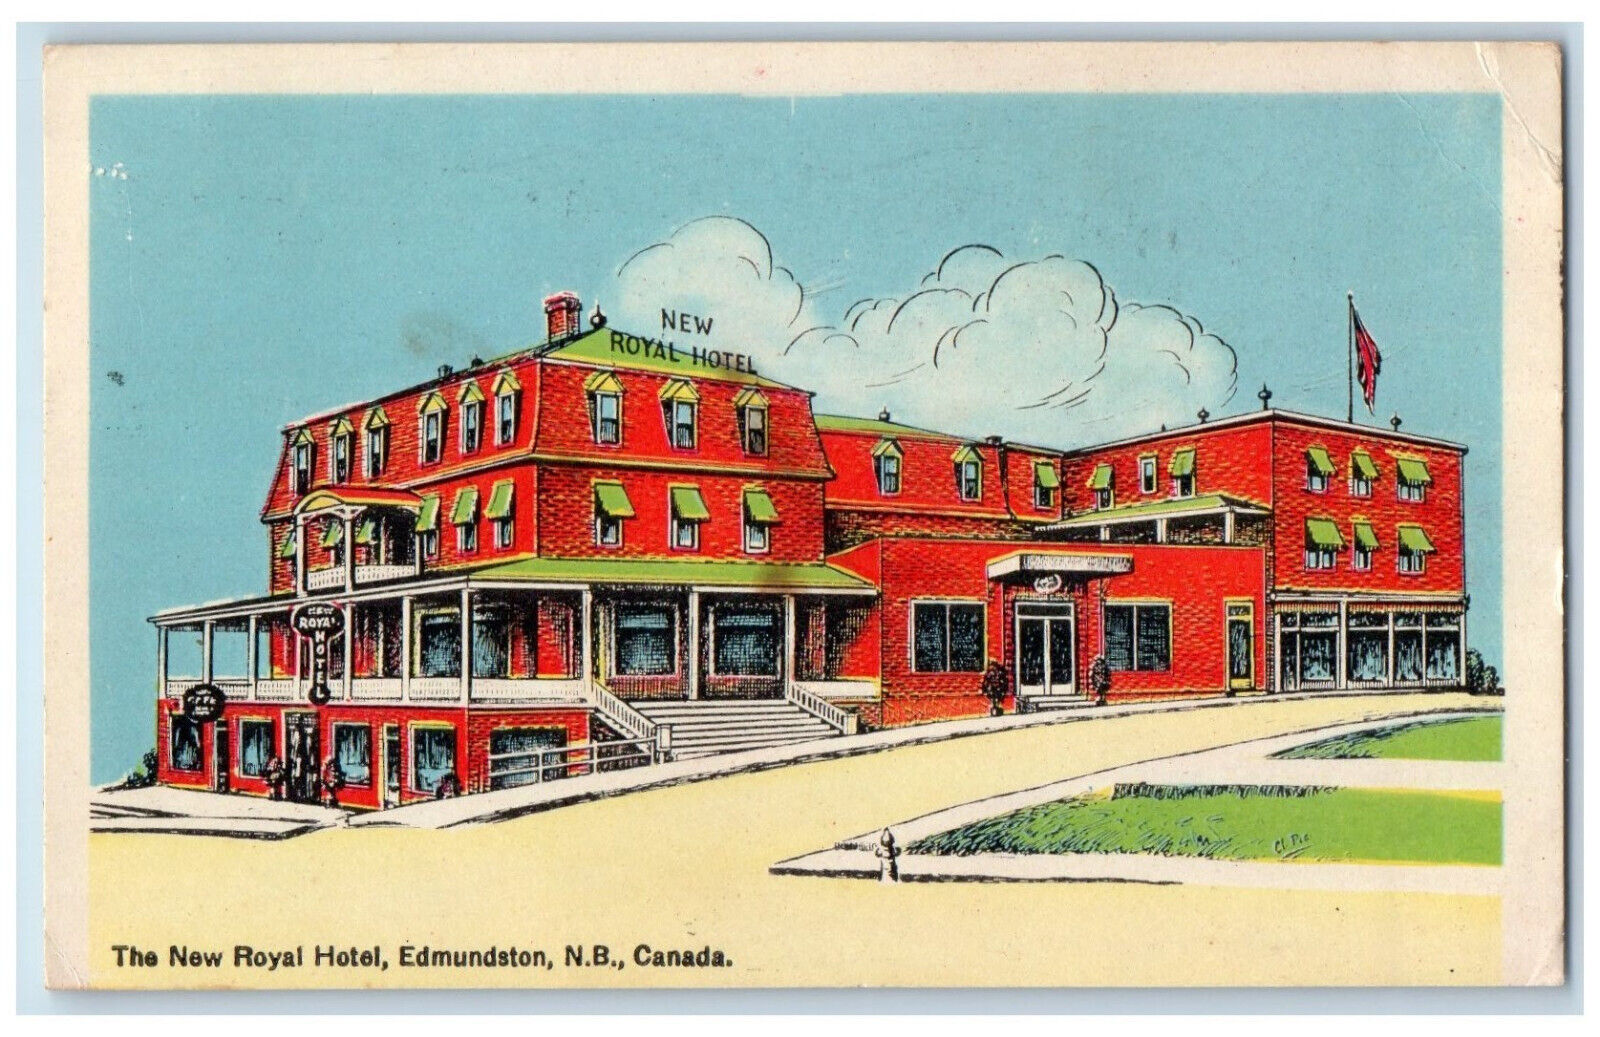 Edmundston New Brunswick Canada Postcard The New Royal Hotel 1952 Vintage